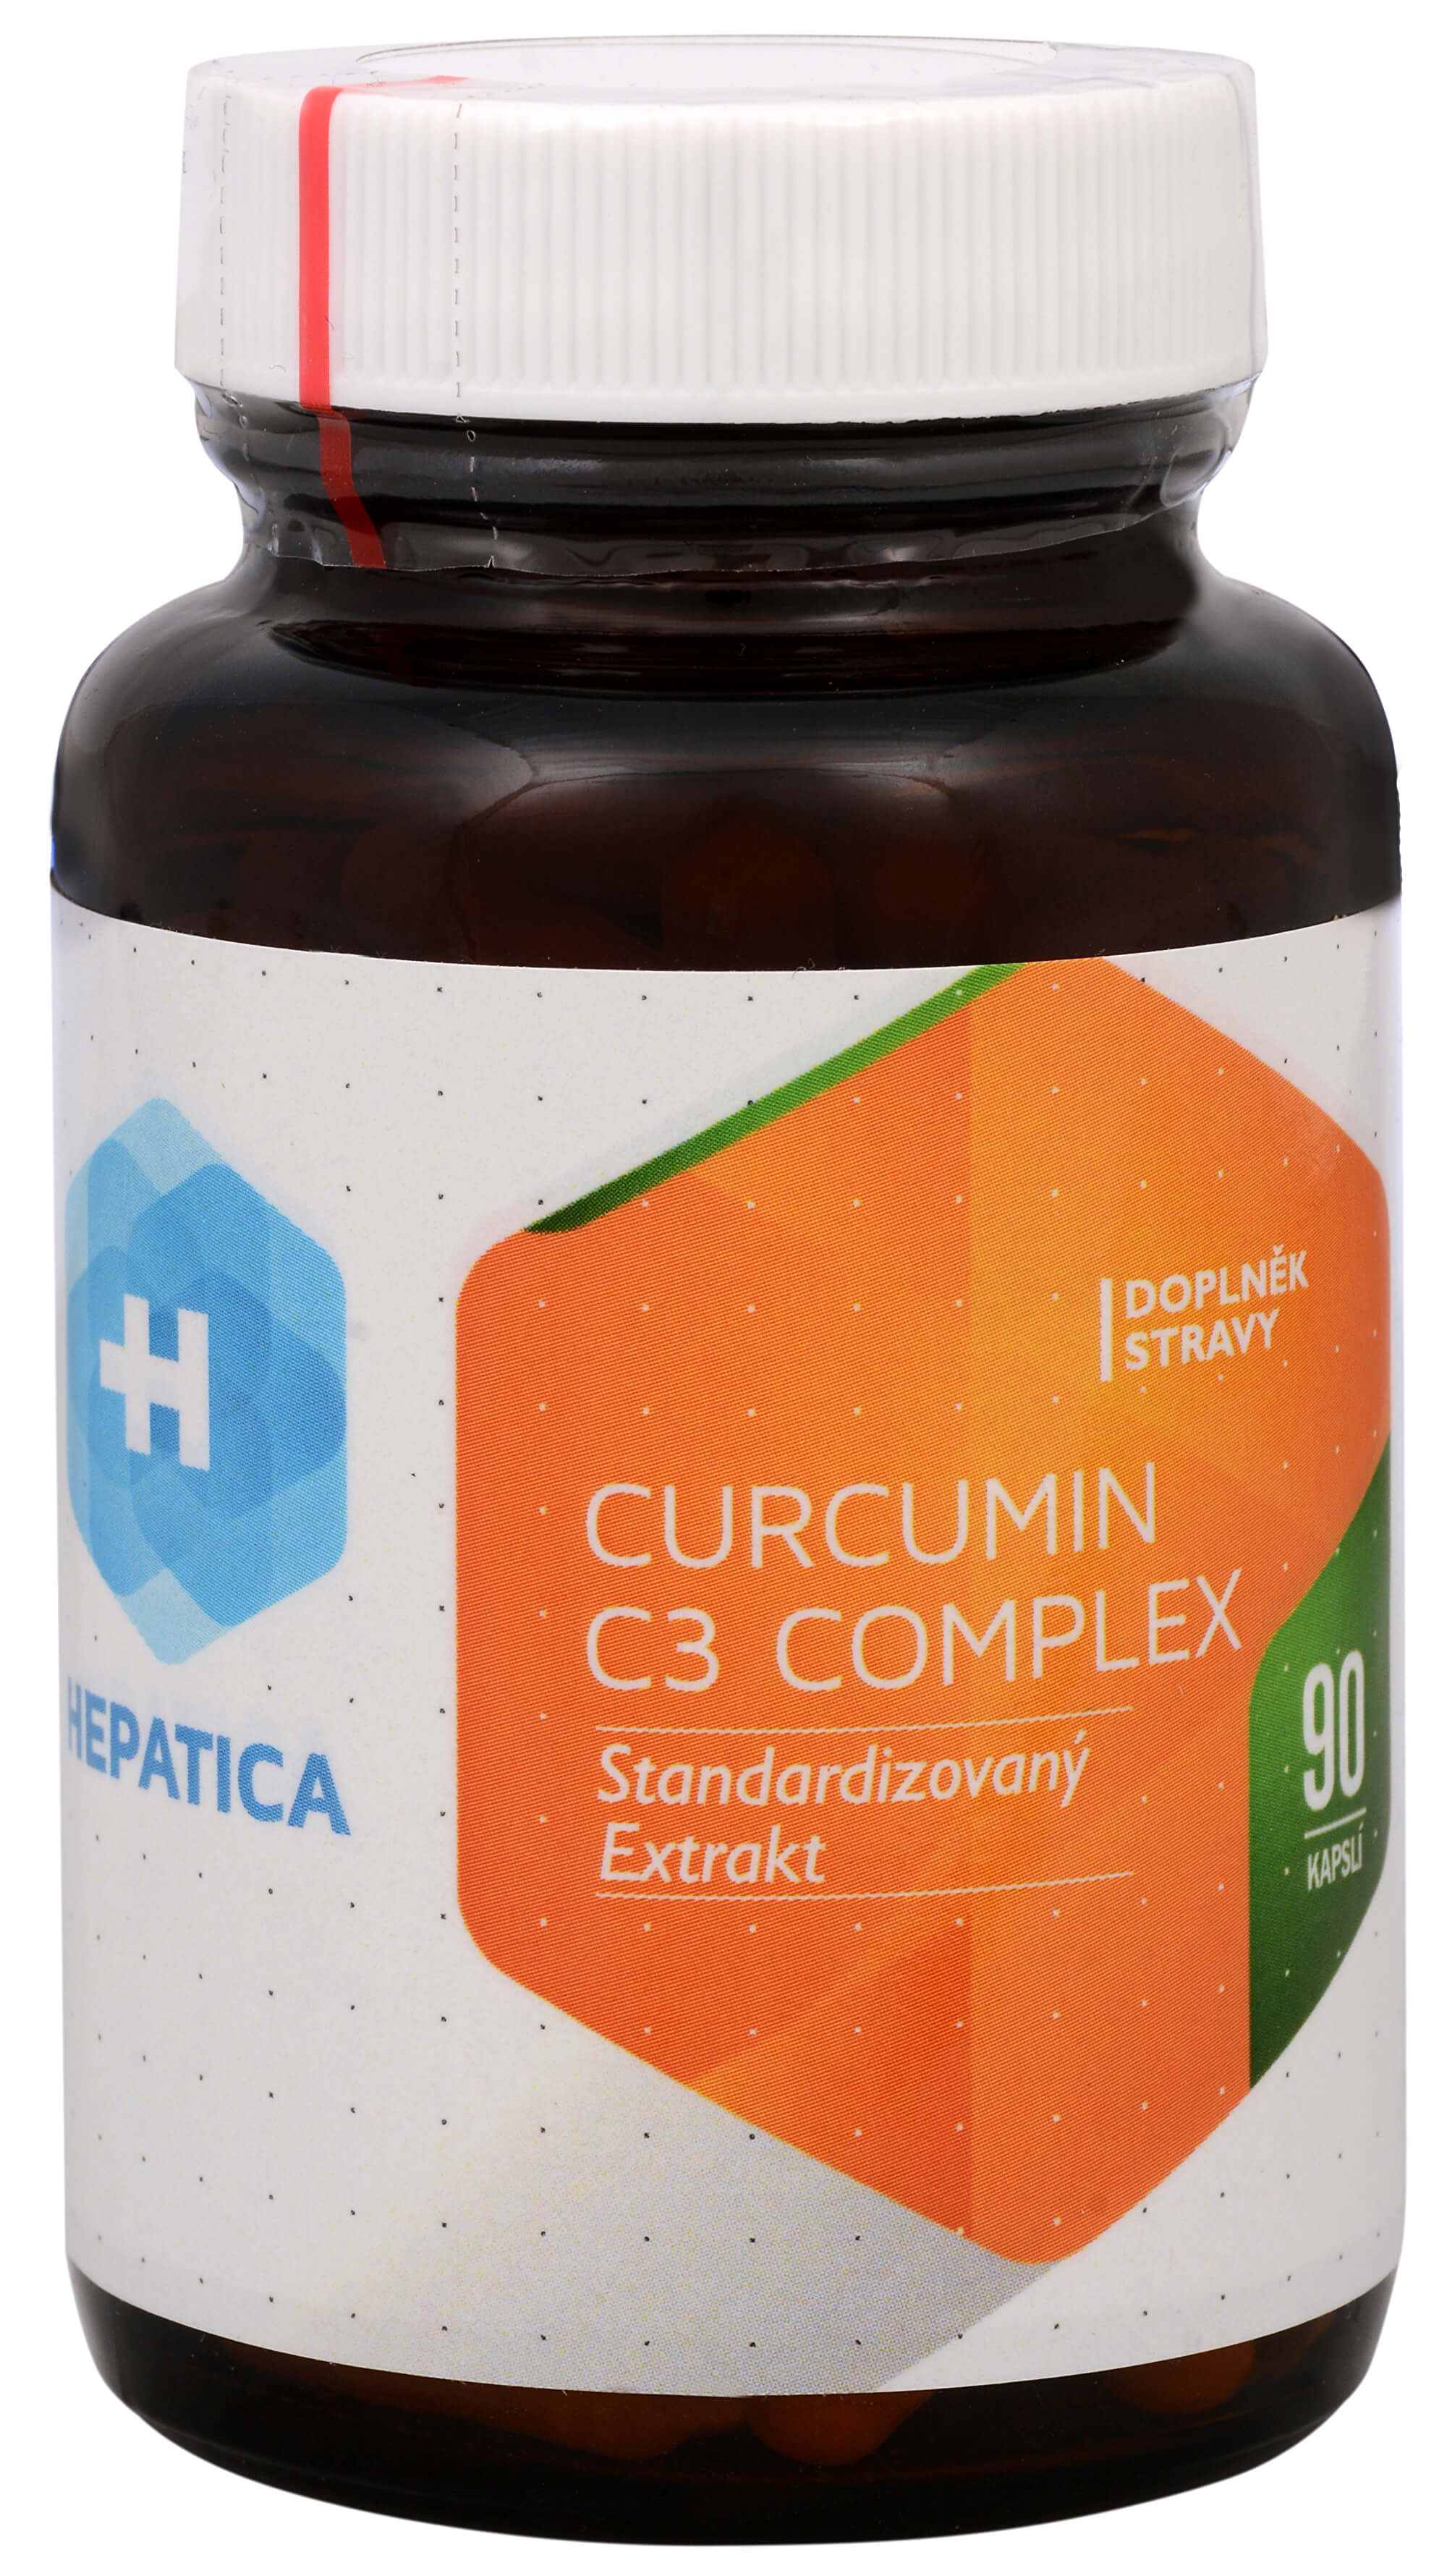 Zobrazit detail výrobku Hepatica Curcumin C3 Complex 90 kapslí